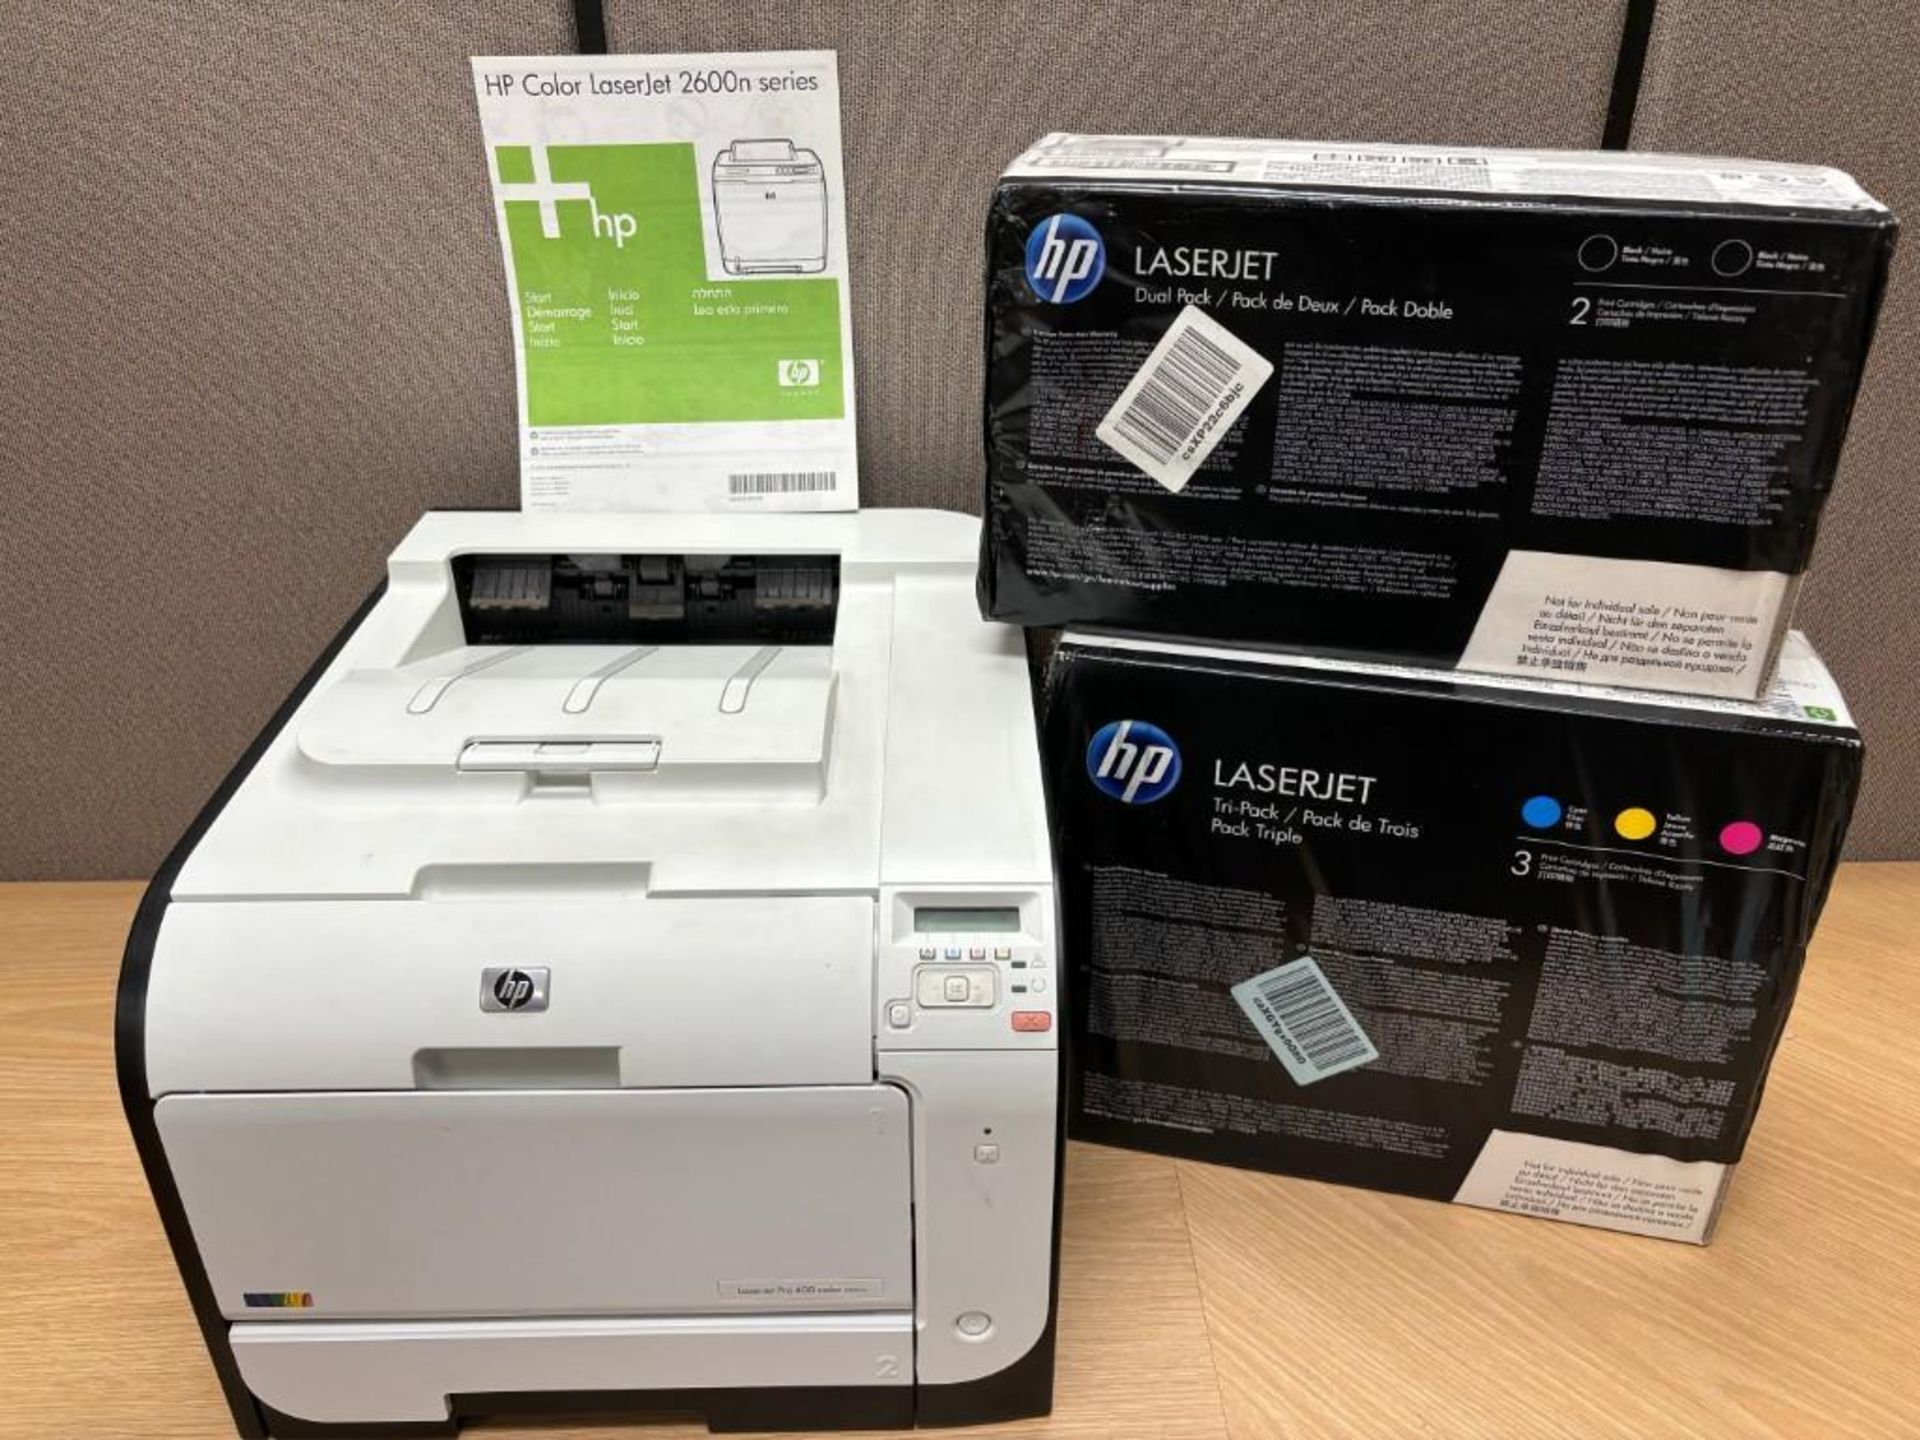 LOT: HP Color LaserJet 2600n Printer, with (2) boxes of HP printing ink